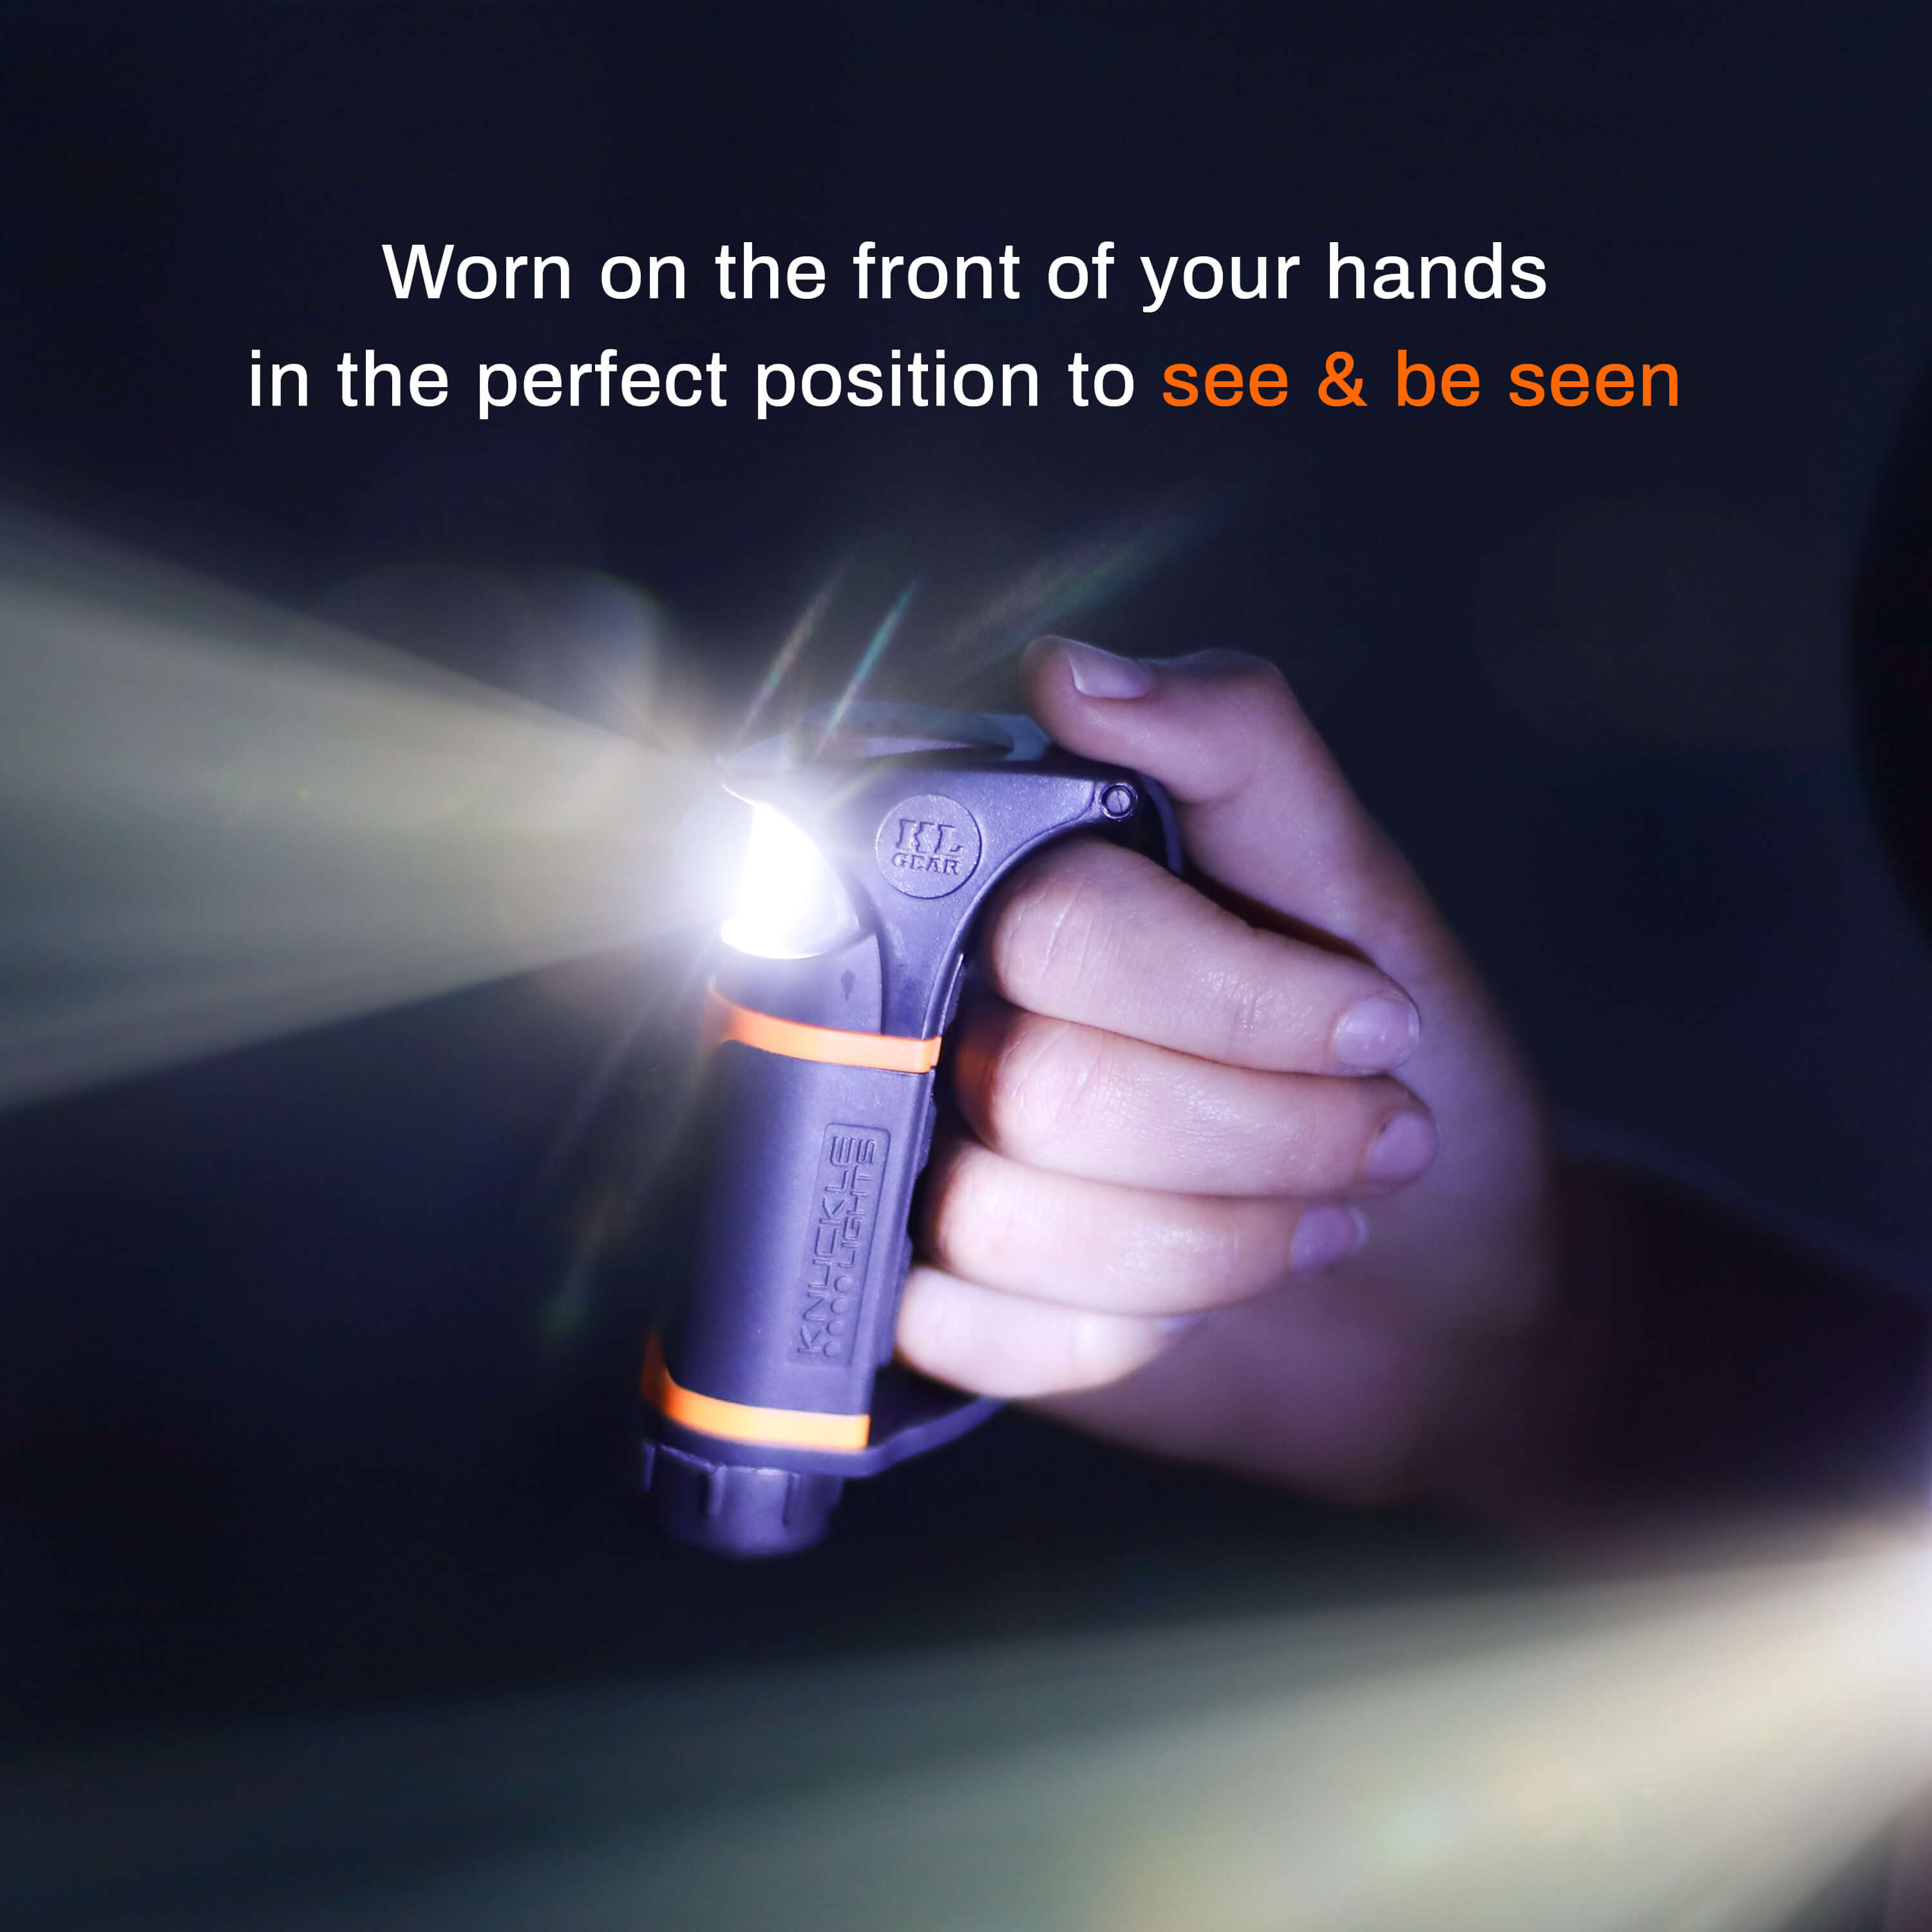 Knuckle Lights Advanced + FREE Safety Gear Bundle